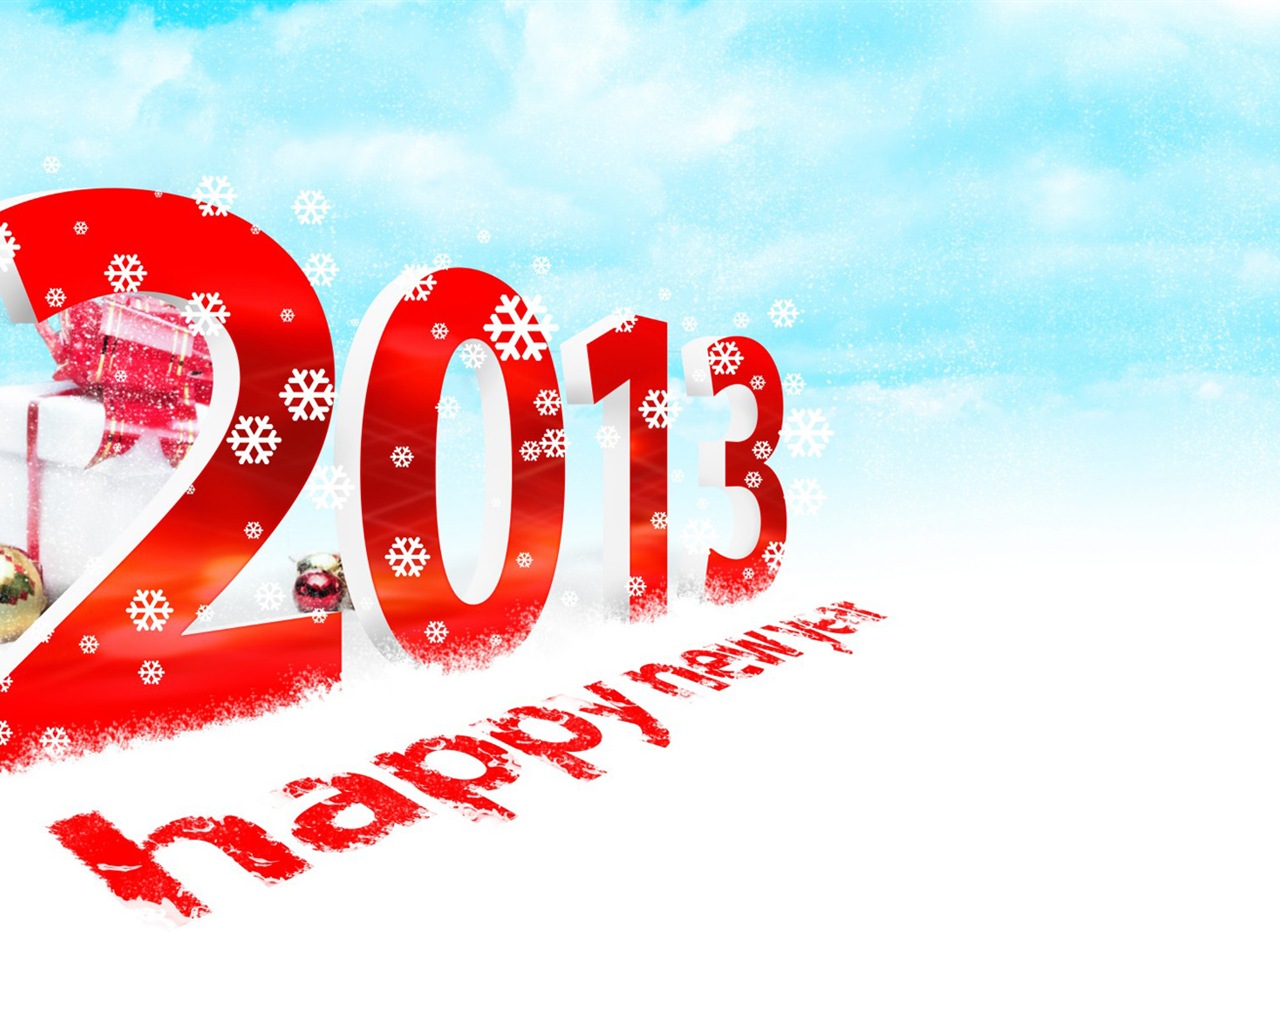 2013 New Year theme creative wallpaper(2) #13 - 1280x1024